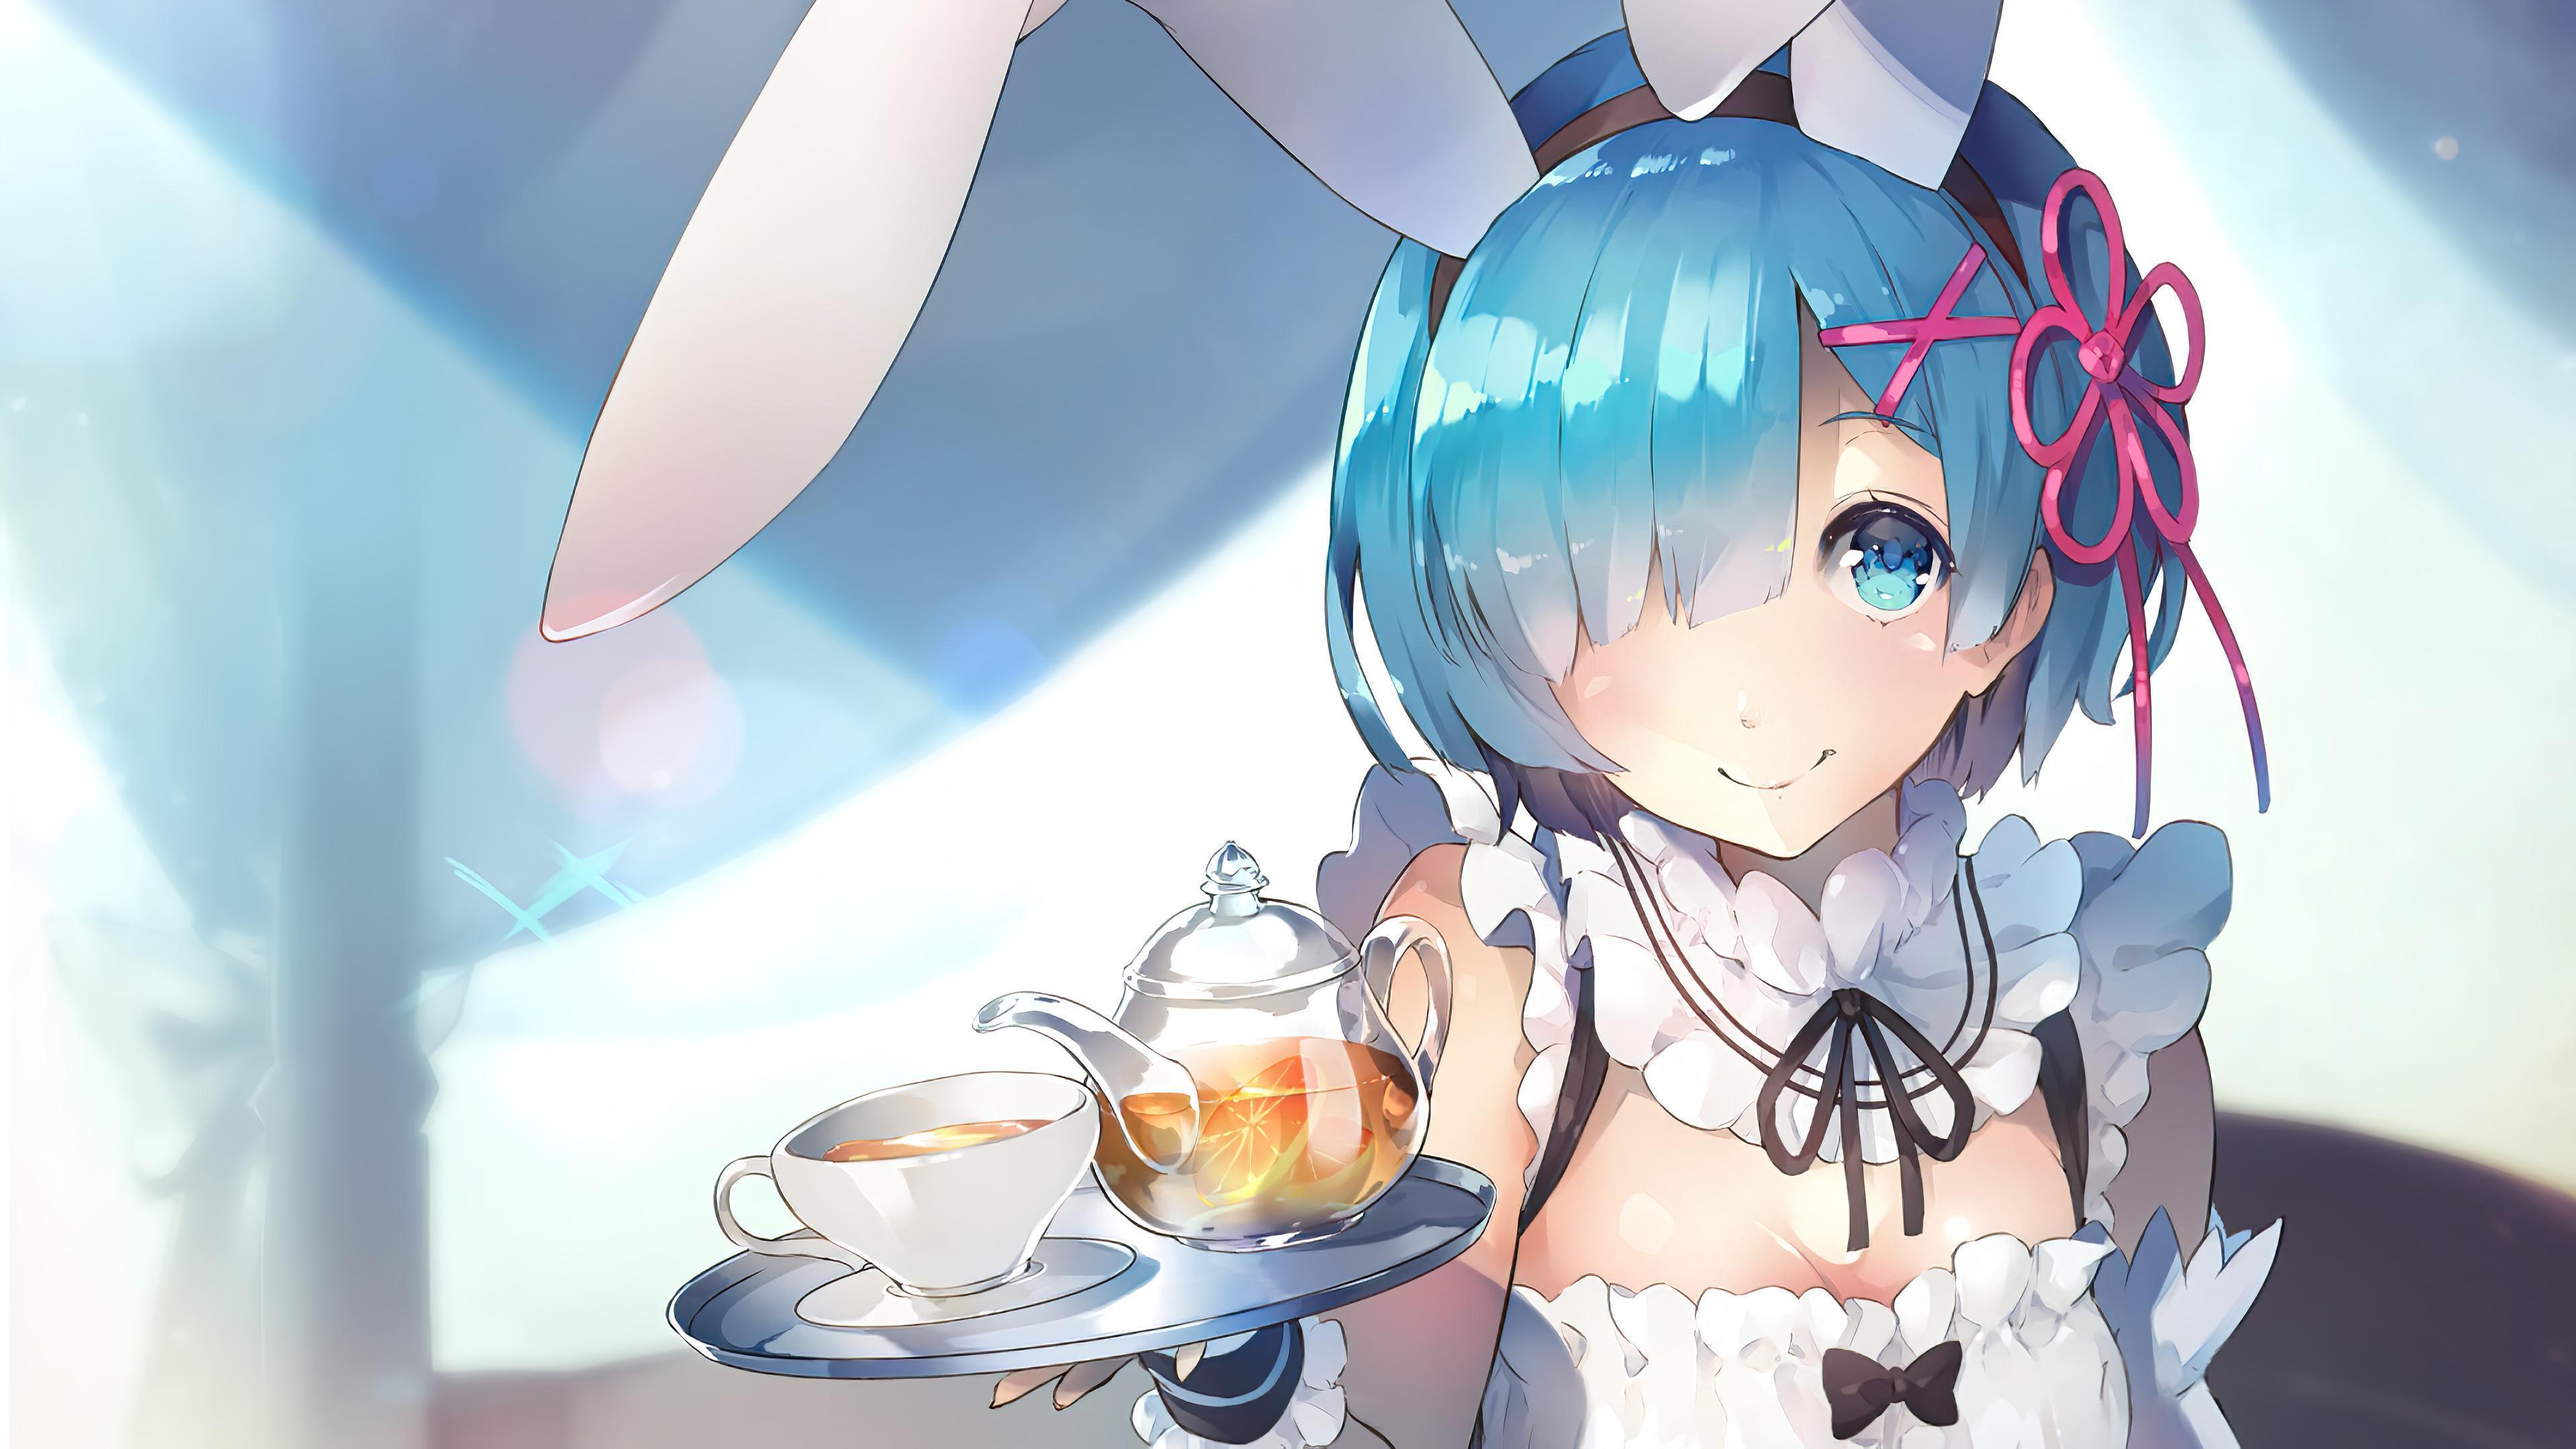 HD wallpaper, Anime, Bunny, Maid, Girl, Re Zero, 4K, Ram